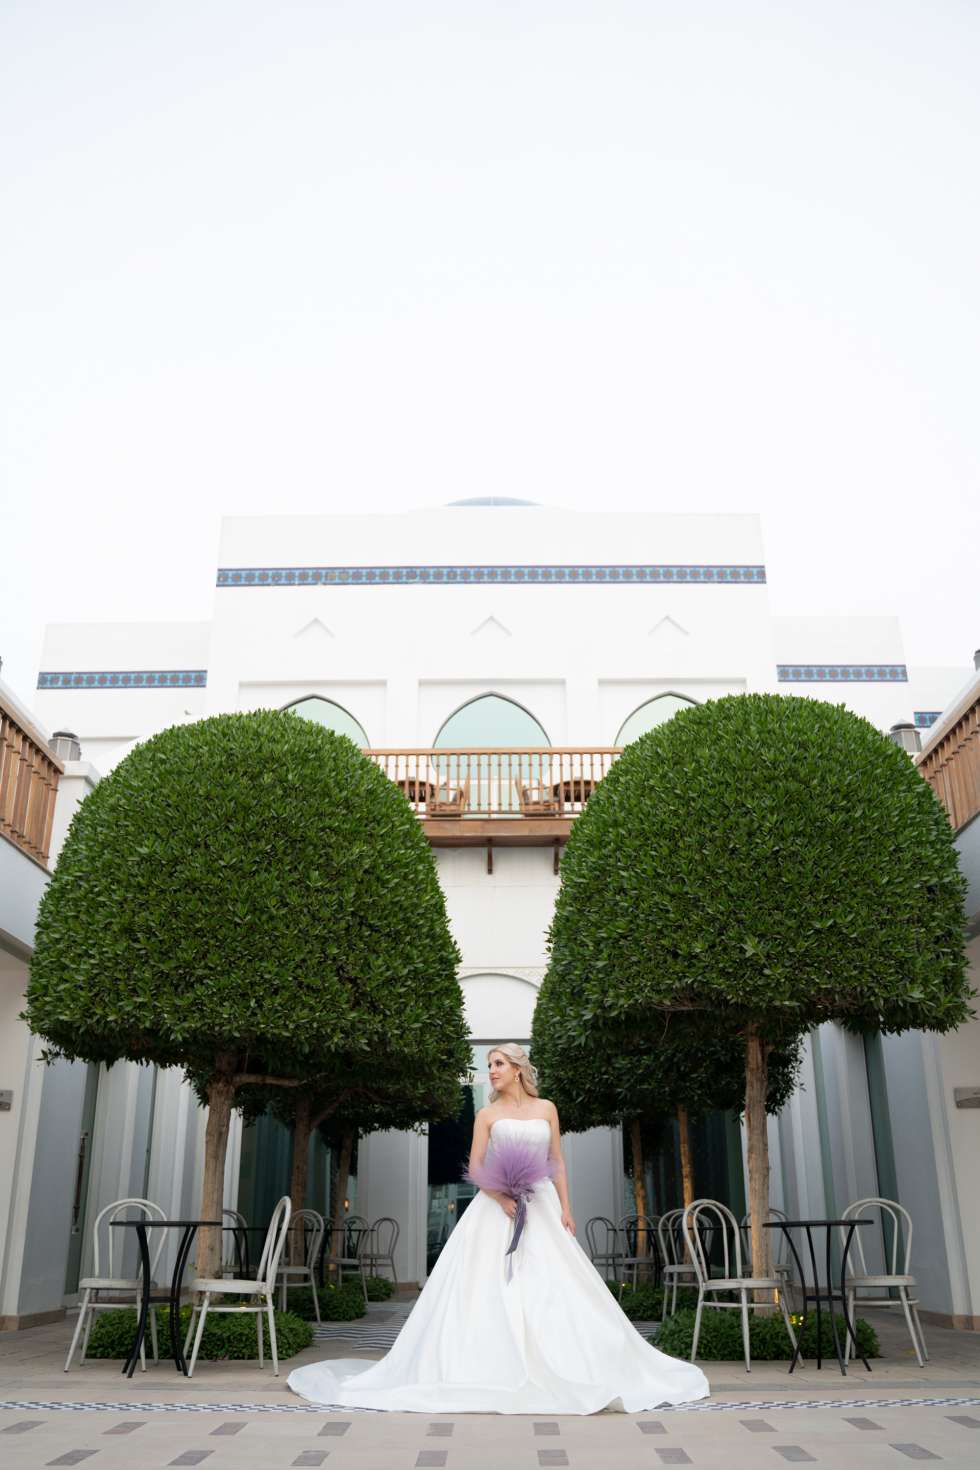 Dubai wedding photo shoot 2